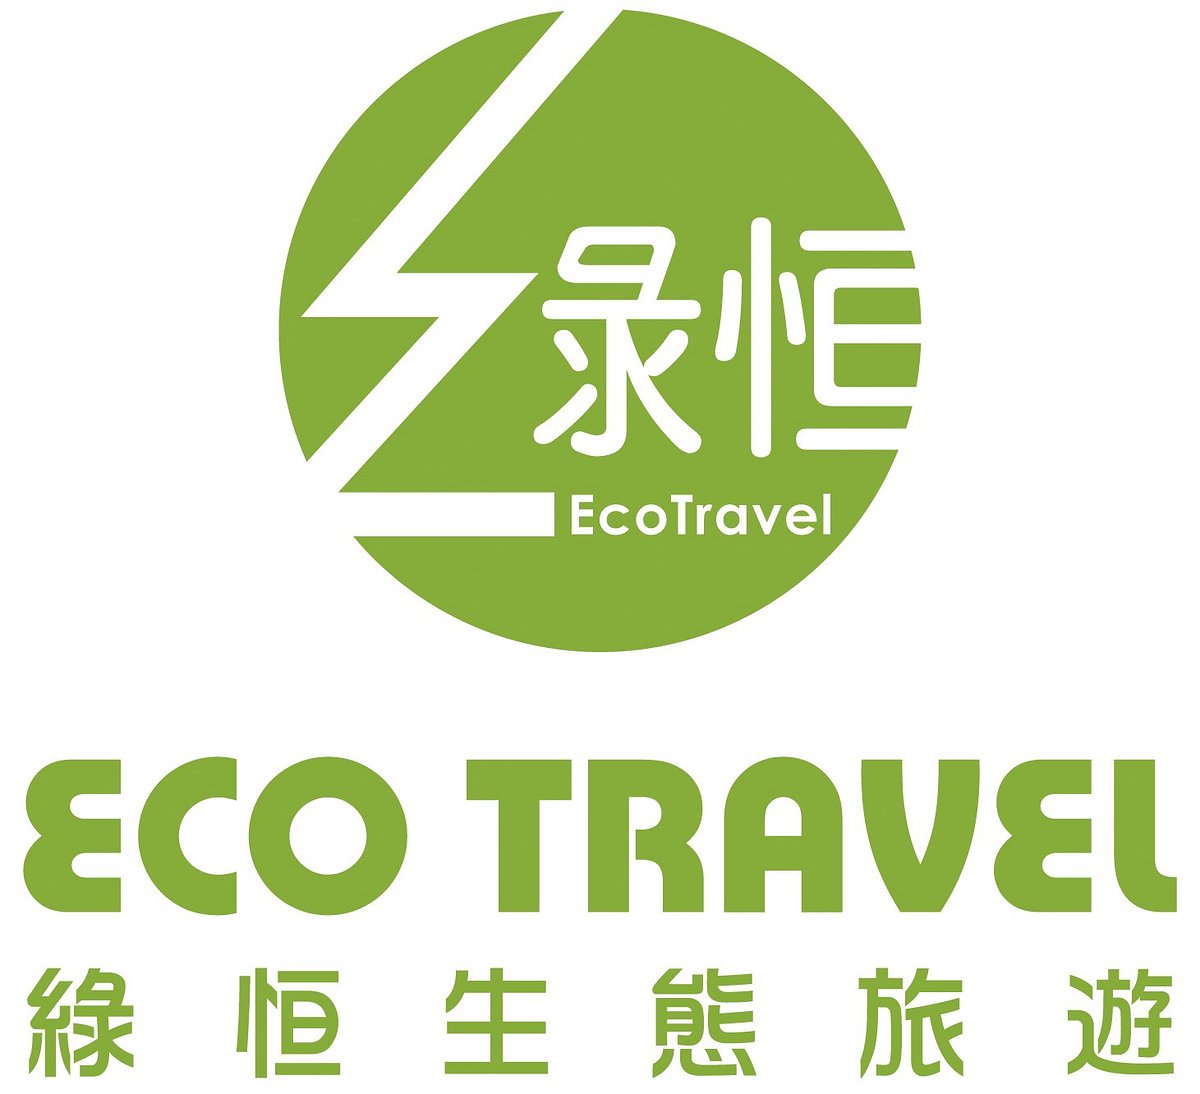 eco travel boutique